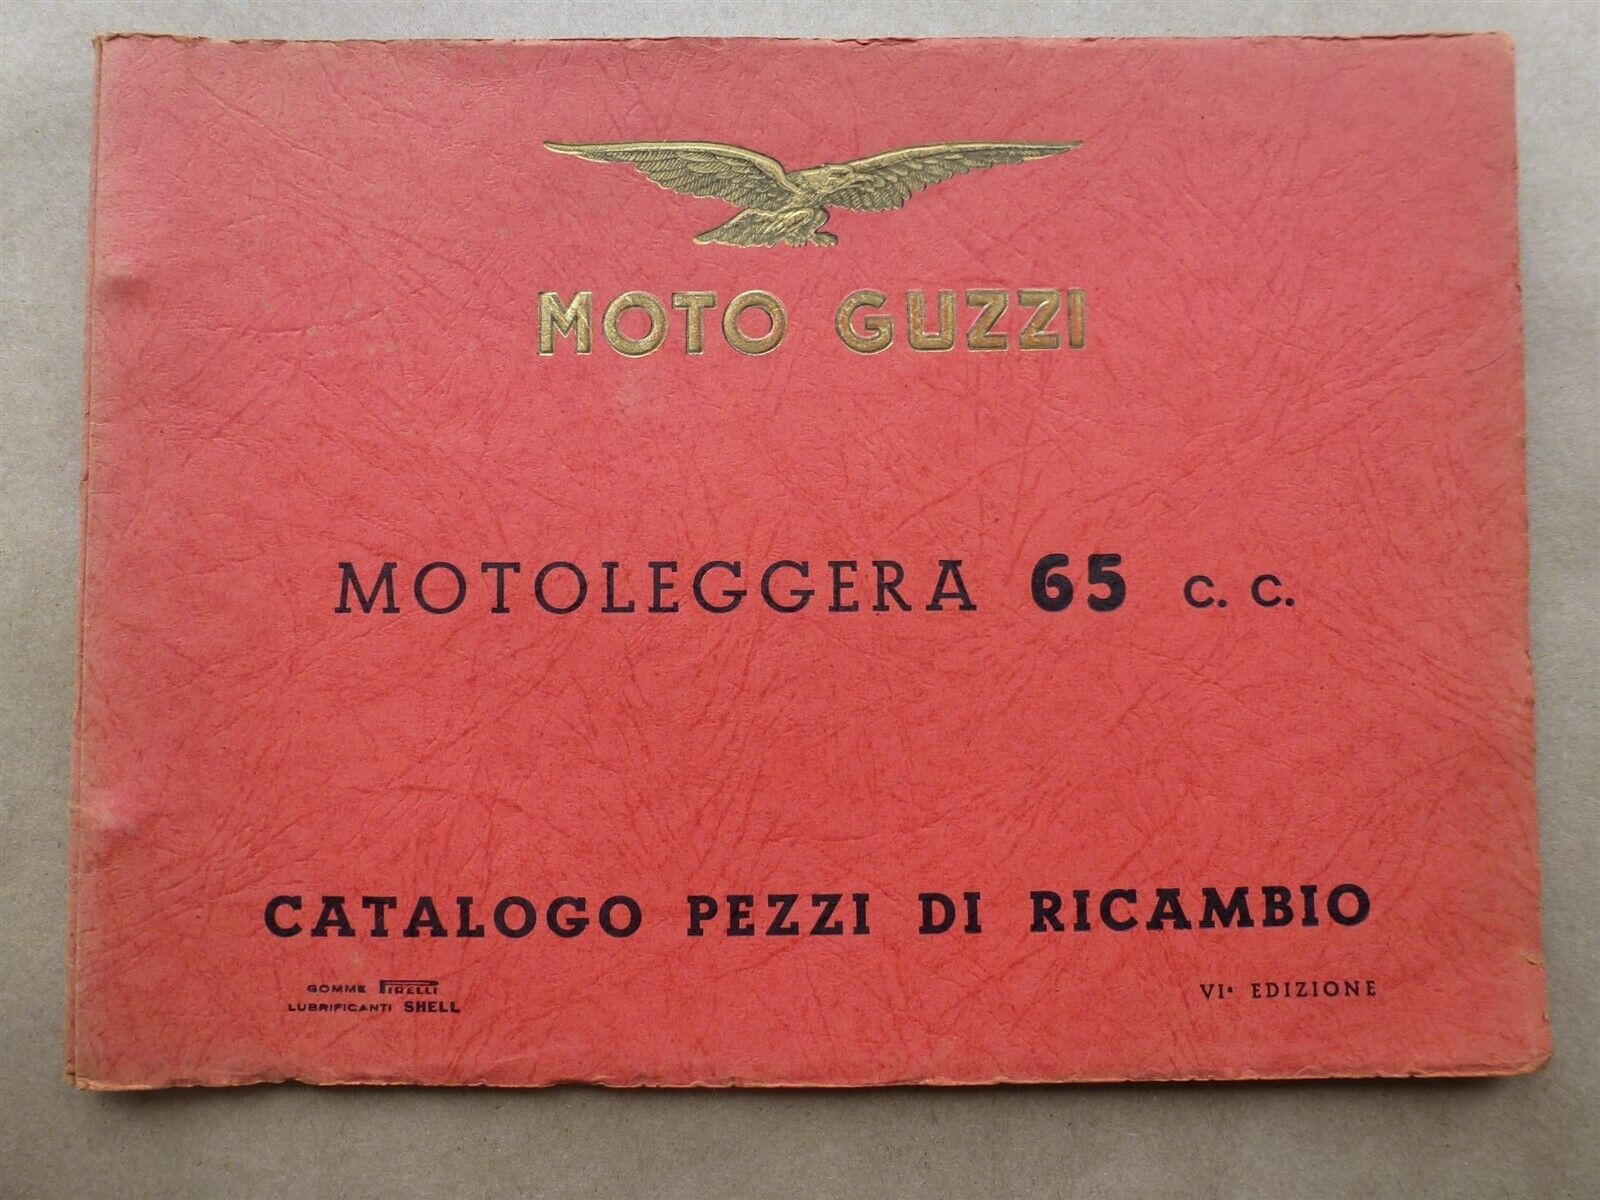 Moto Guzzi motorcycle Motociclo Motoleggera 65 c.c. Part Catalog manual 1952